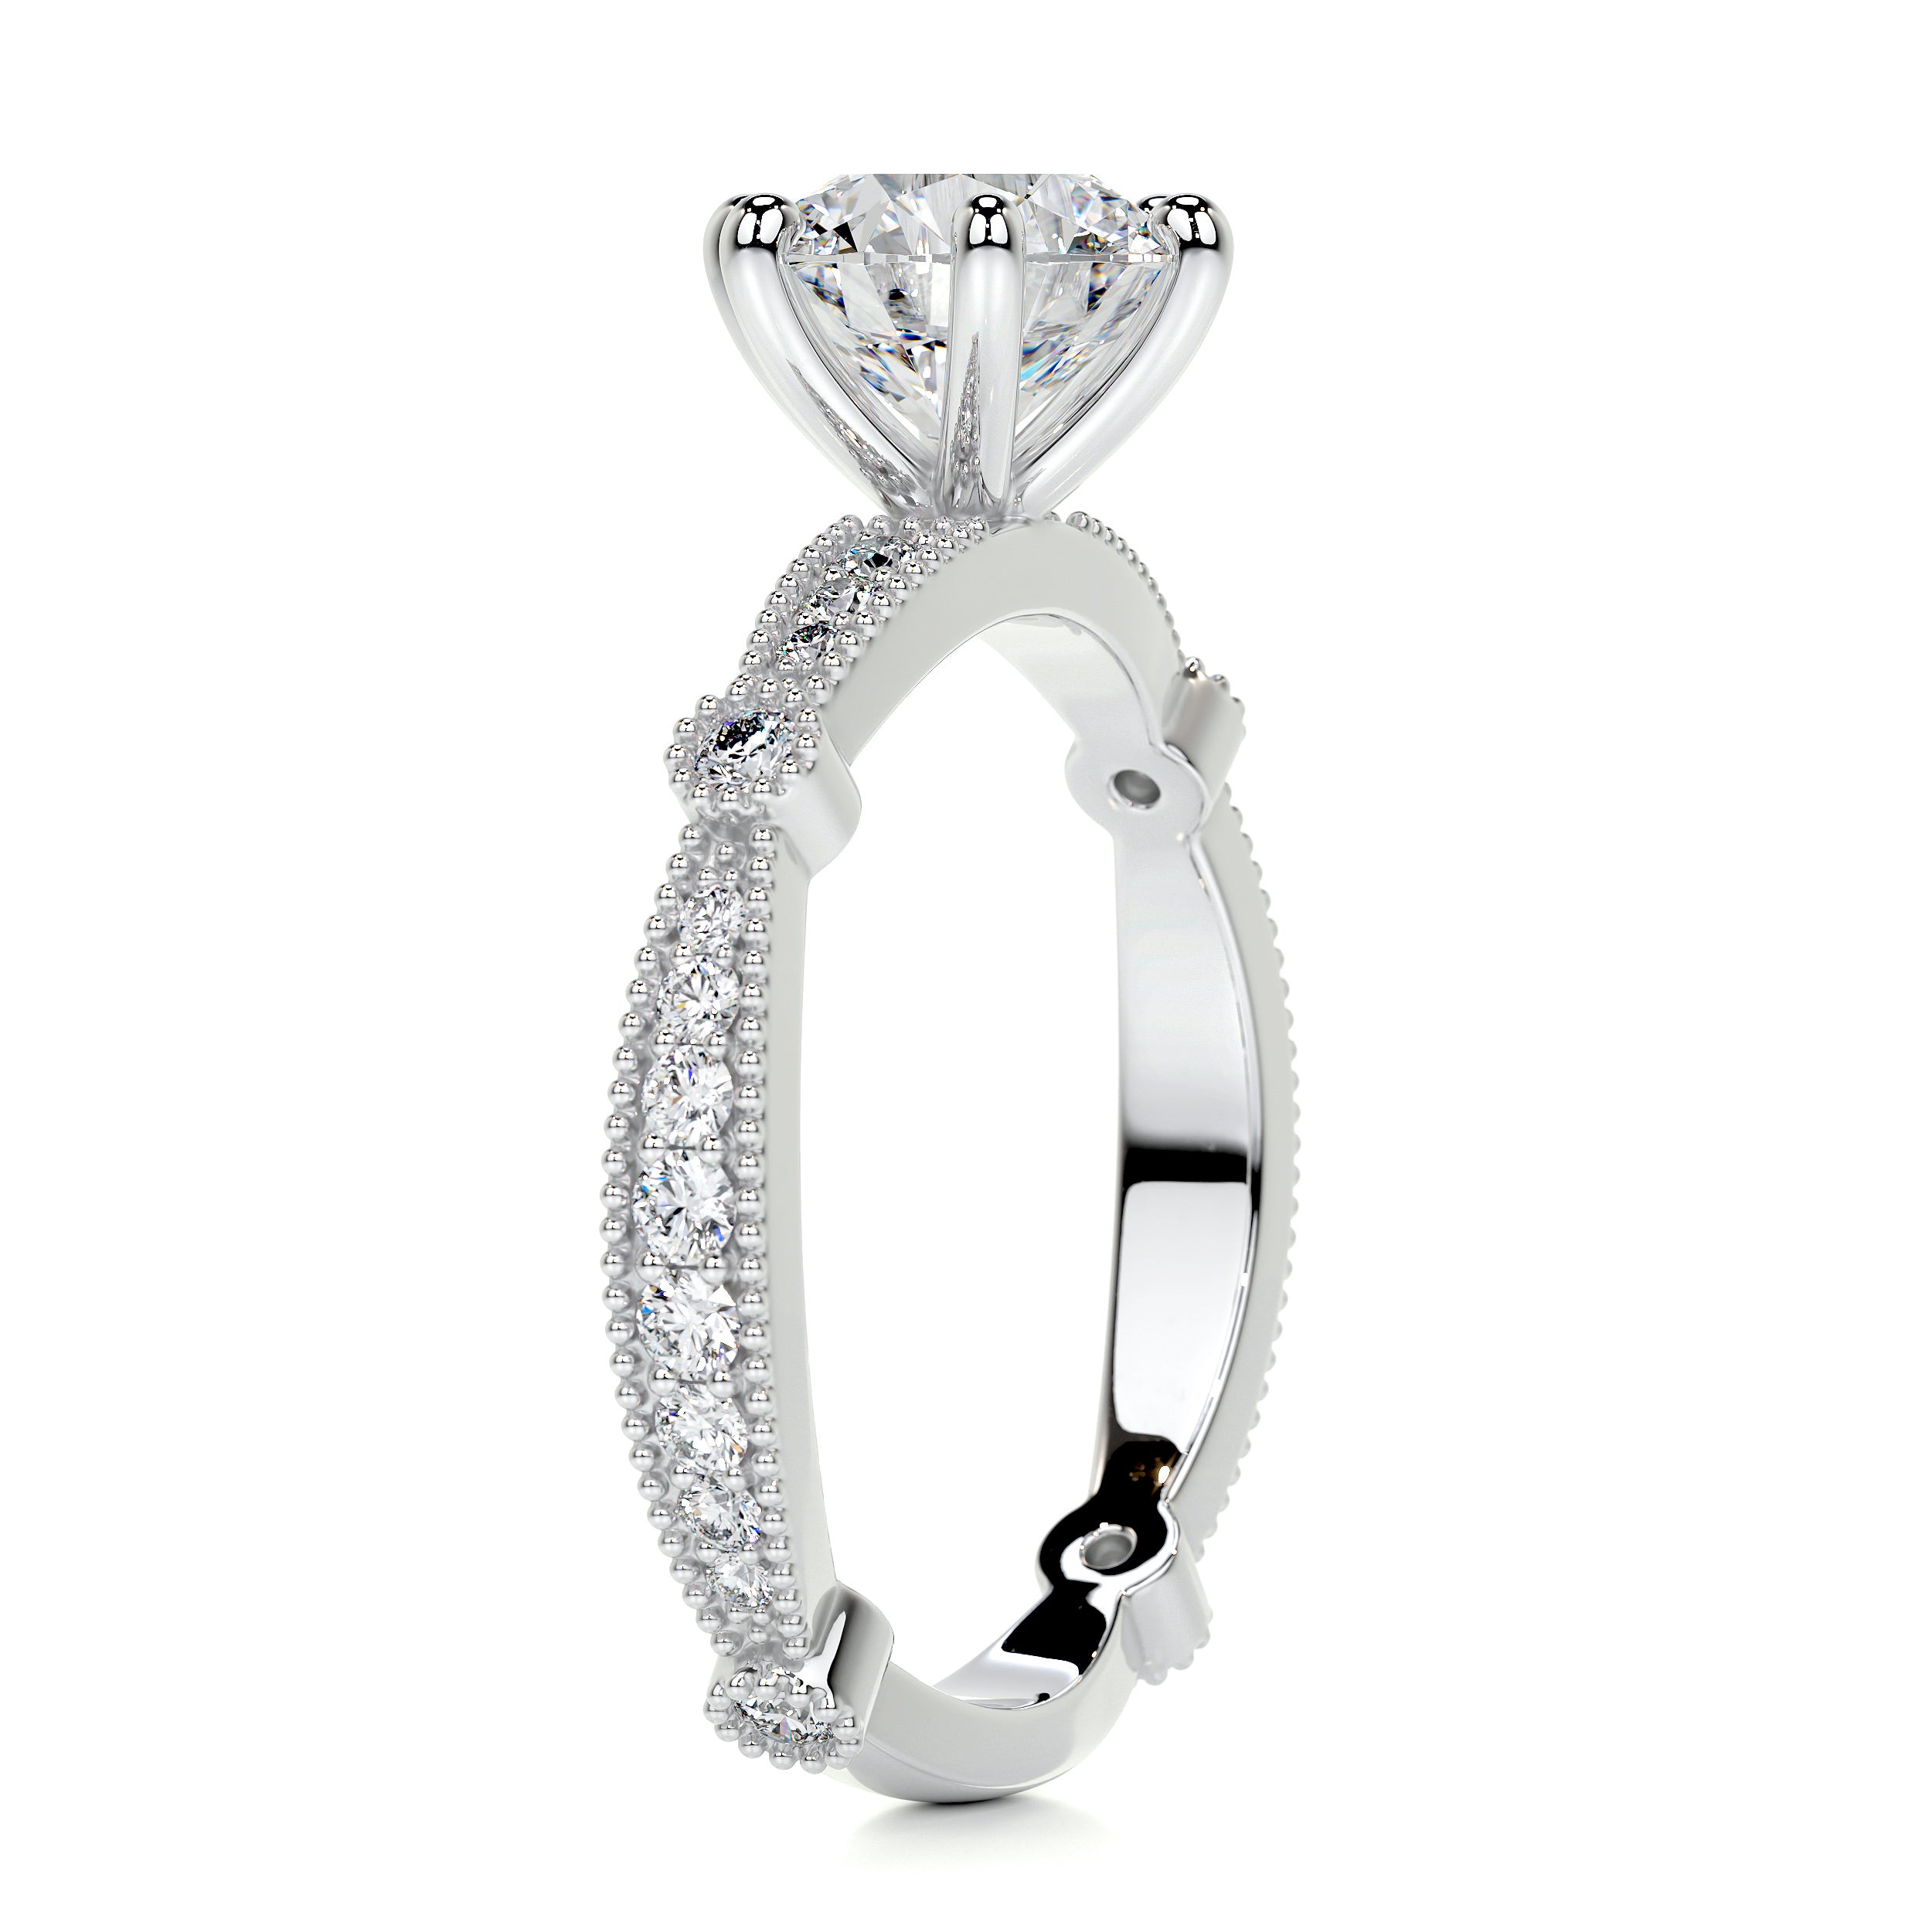 Amelia Diamond Engagement Ring - 18K White Gold